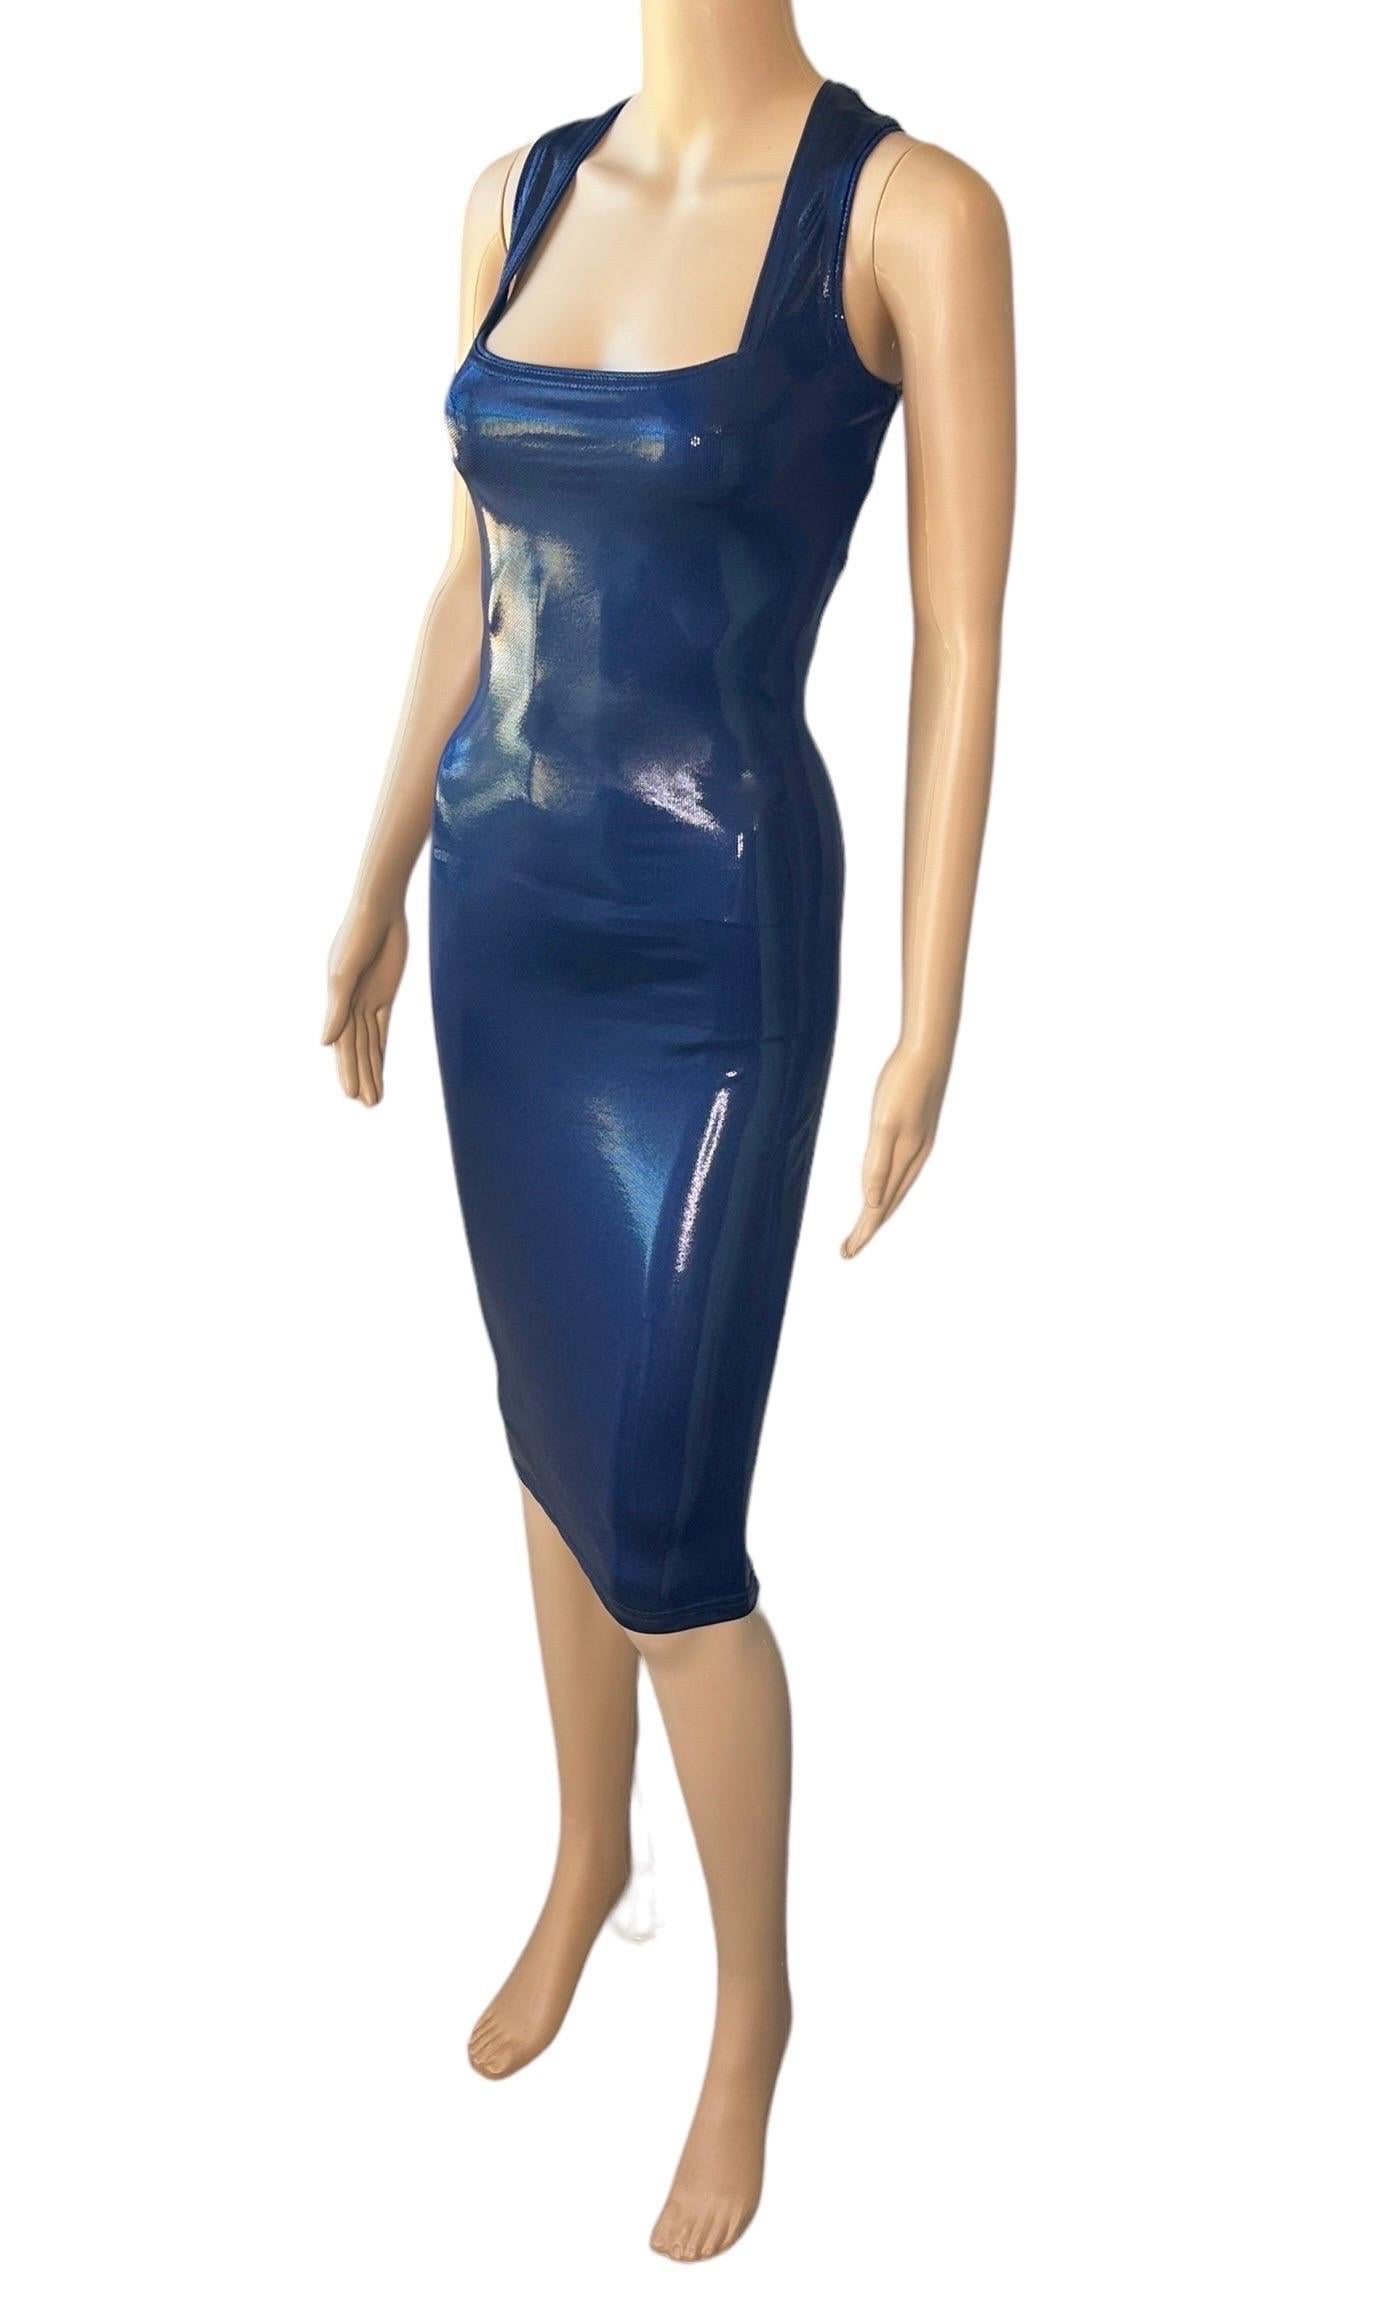 Women's or Men's Gianni Versace c. 1994 Vintage Wet Look Stretch Bodycon Navy Blue Midi Dress